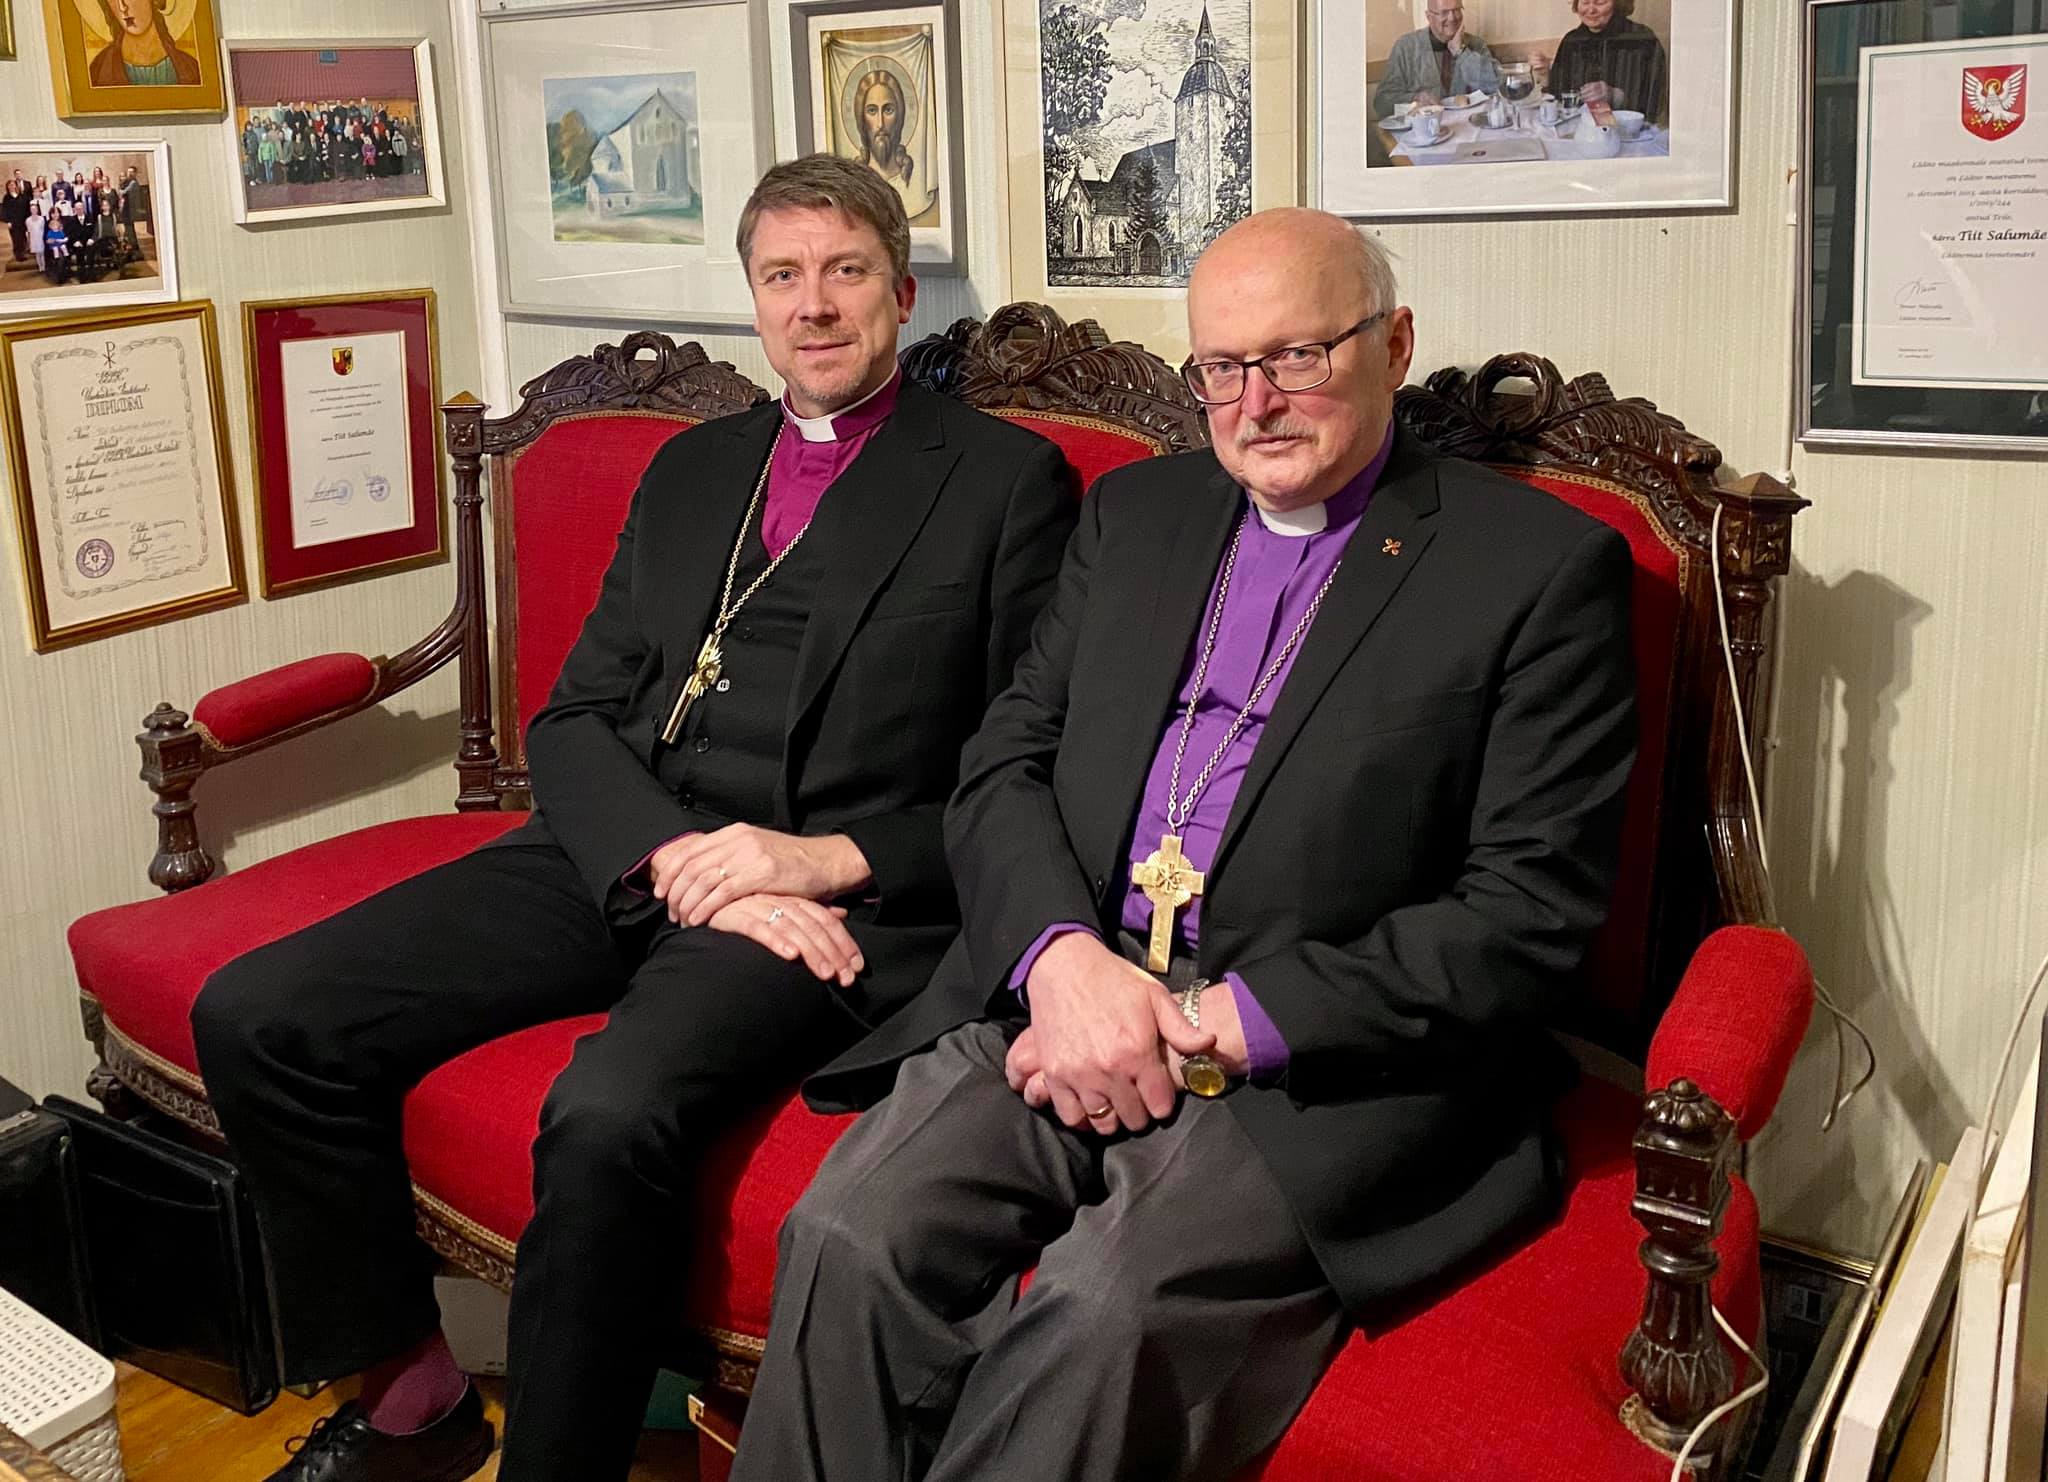 Piiskop Tiit Salumäe võõrustas täna Haapsalus peapiiskop Urmas Viilmad